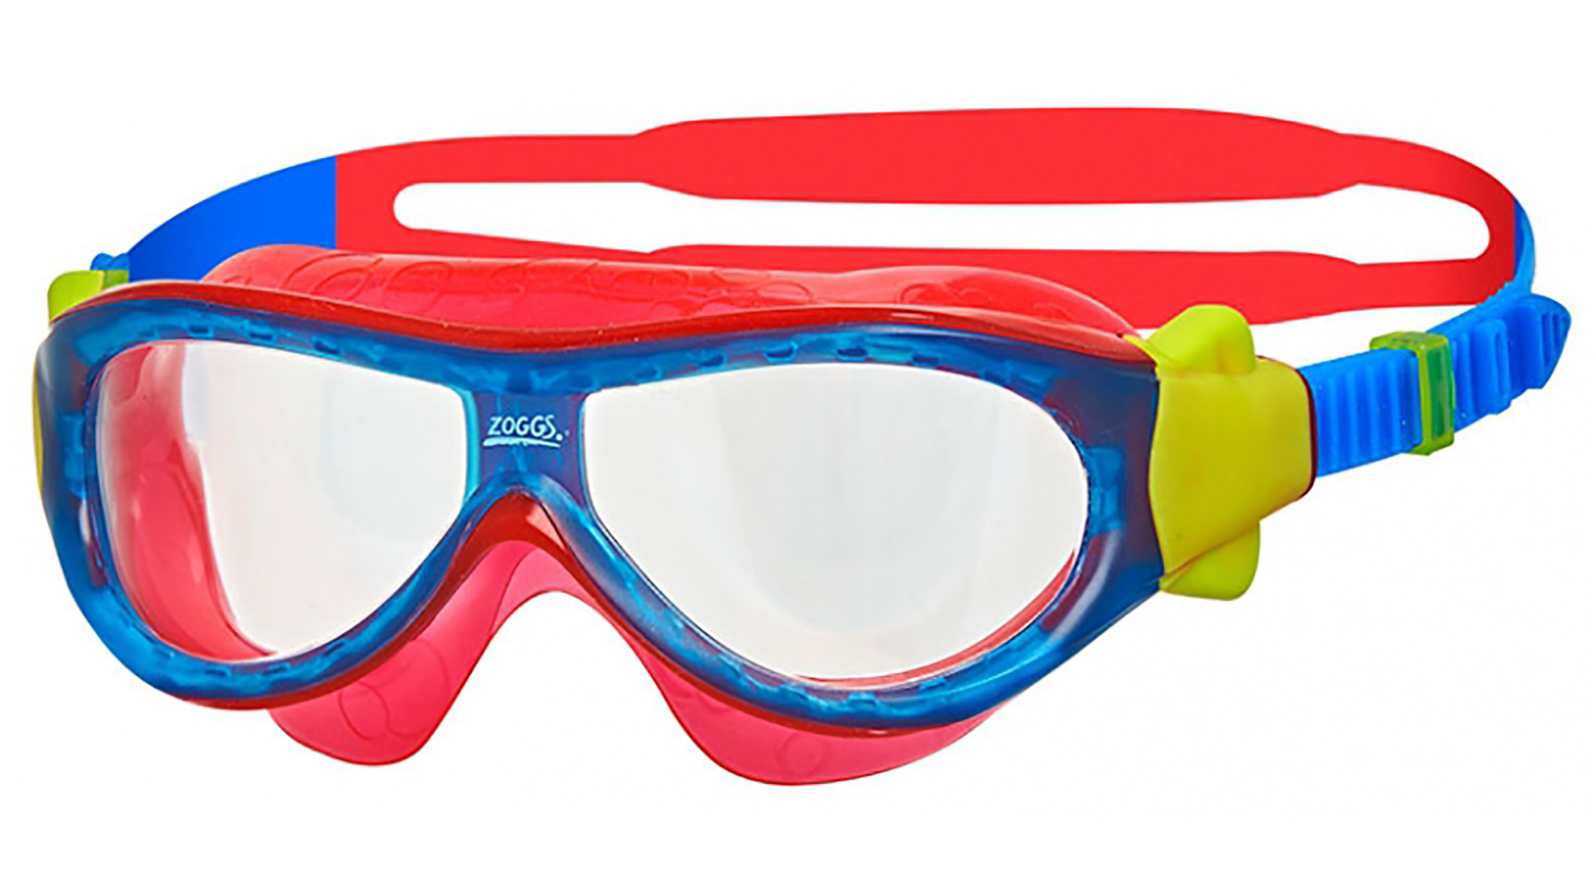 ZOGGS Очки-маска для плавания Phantom Kids (красный/голубой) zoggs очки для плавания raptor hcb mirror синий синий